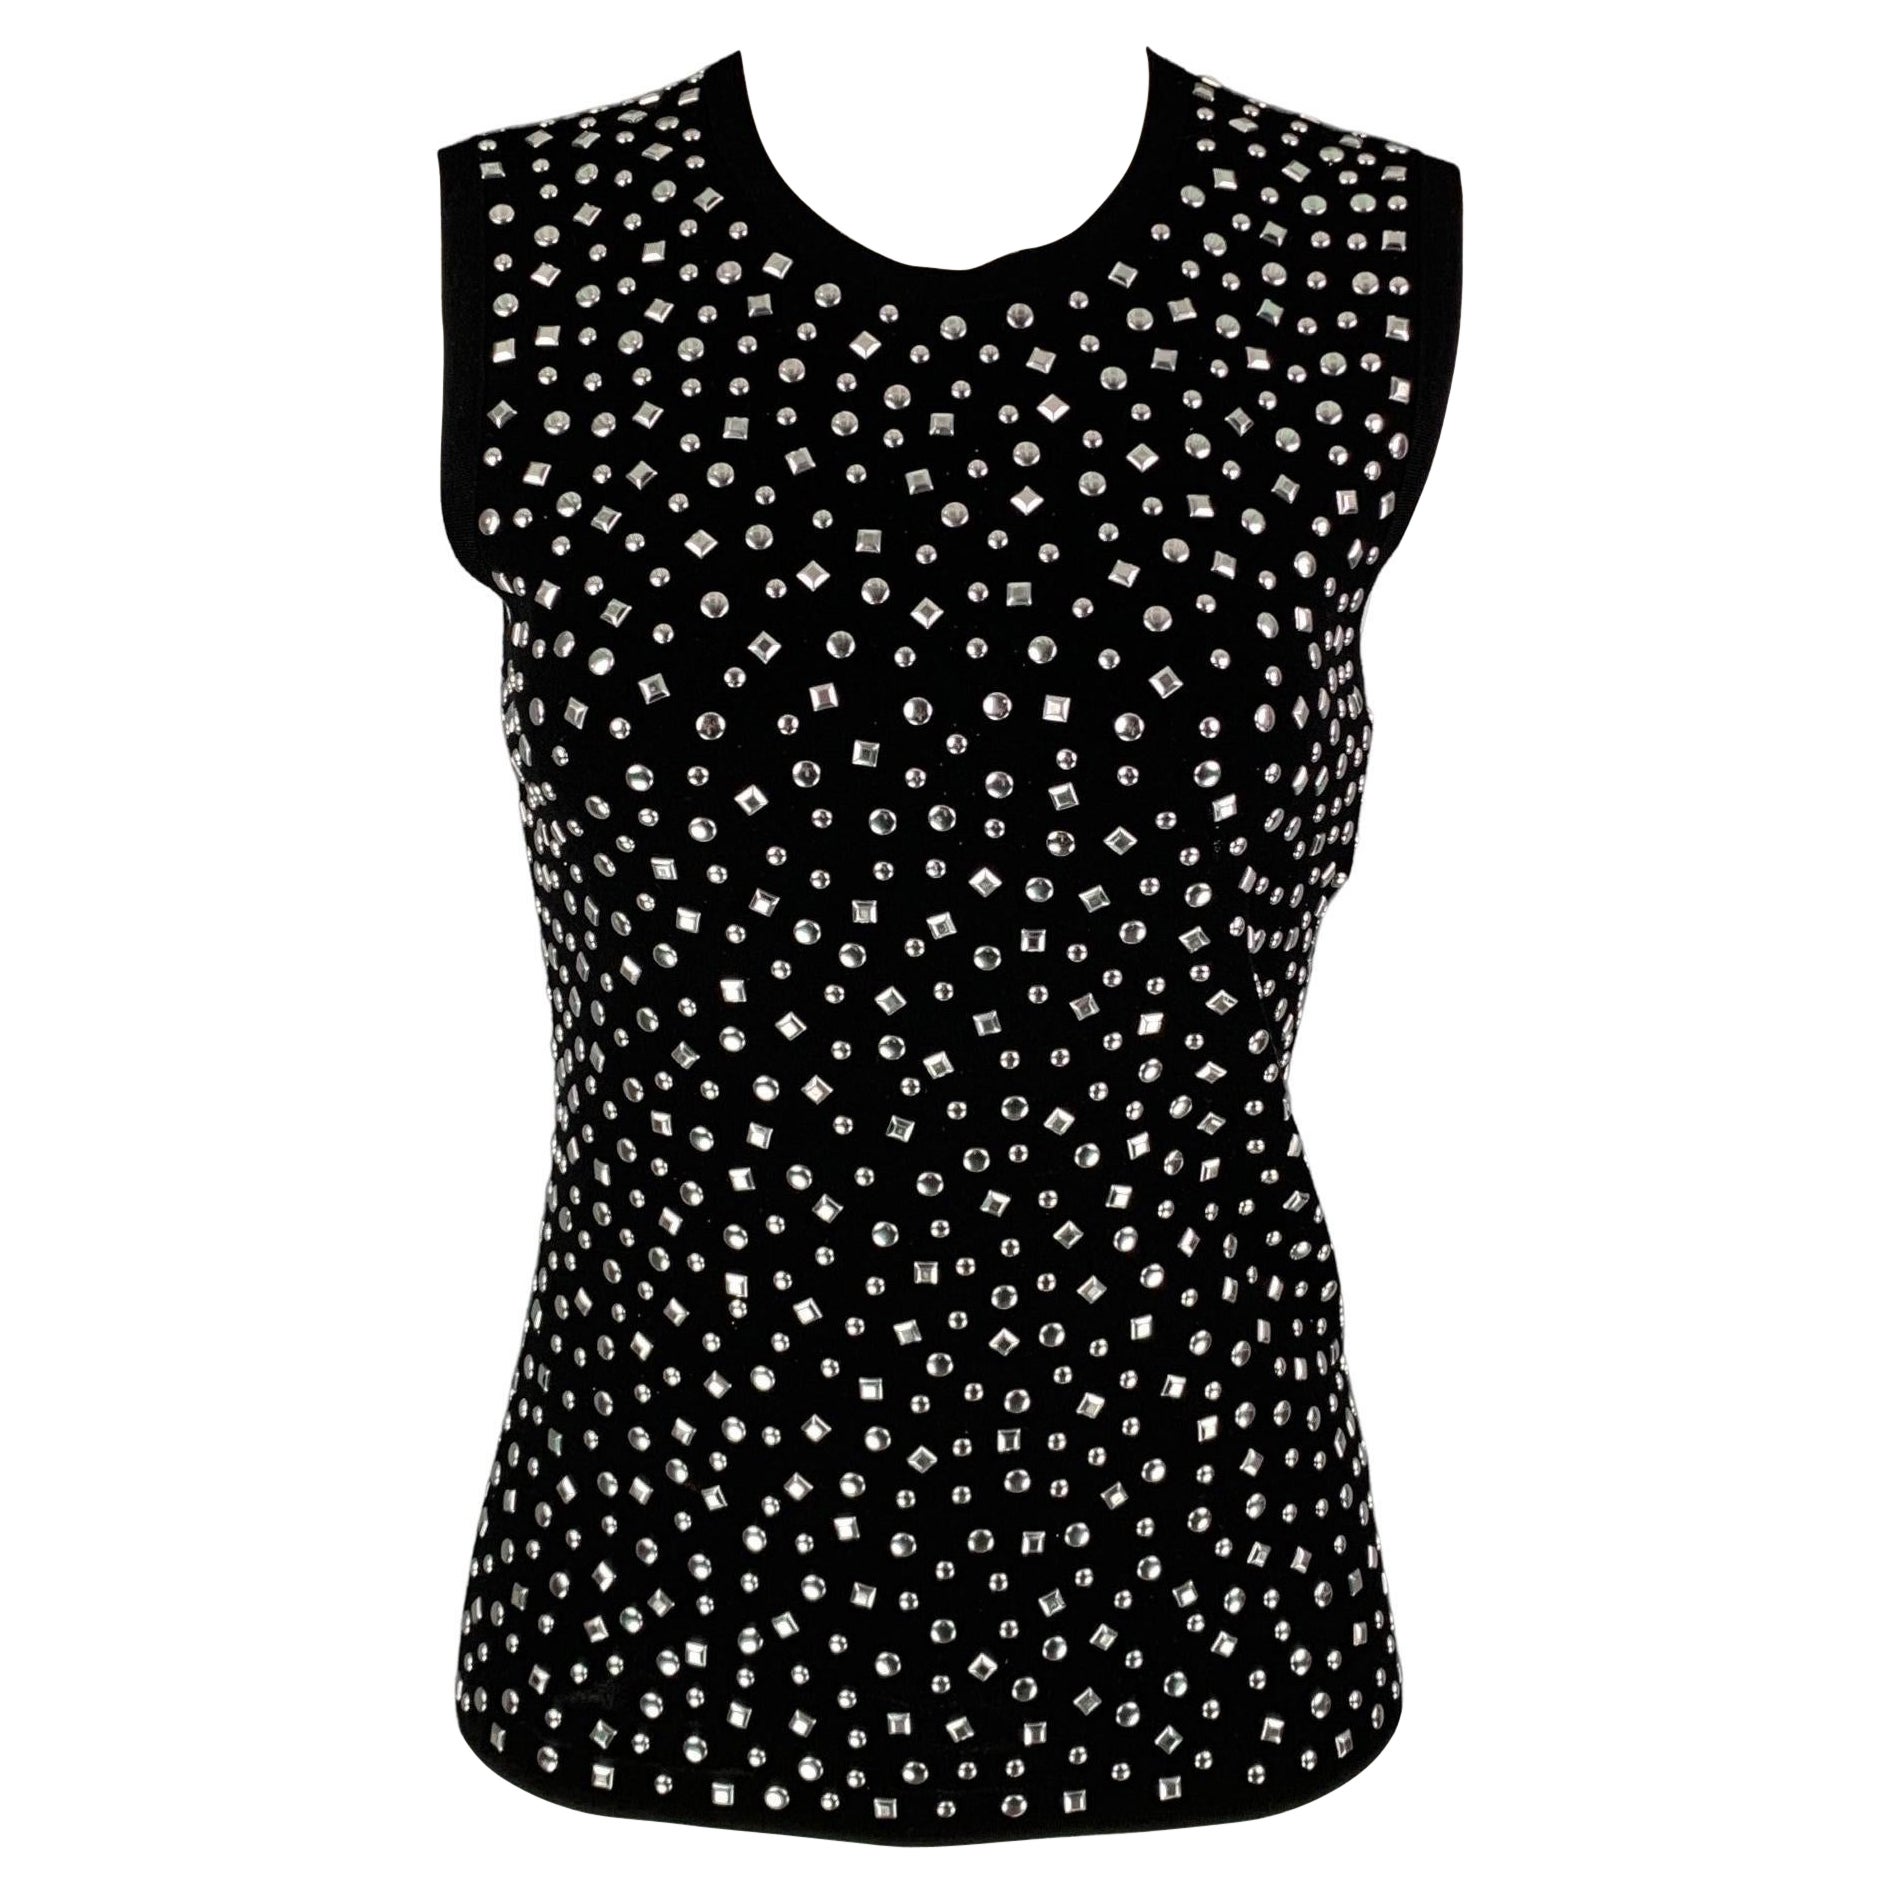 MICHAEL KORS COLLECTION Size M Black Viscose Blend Studded Dress Top